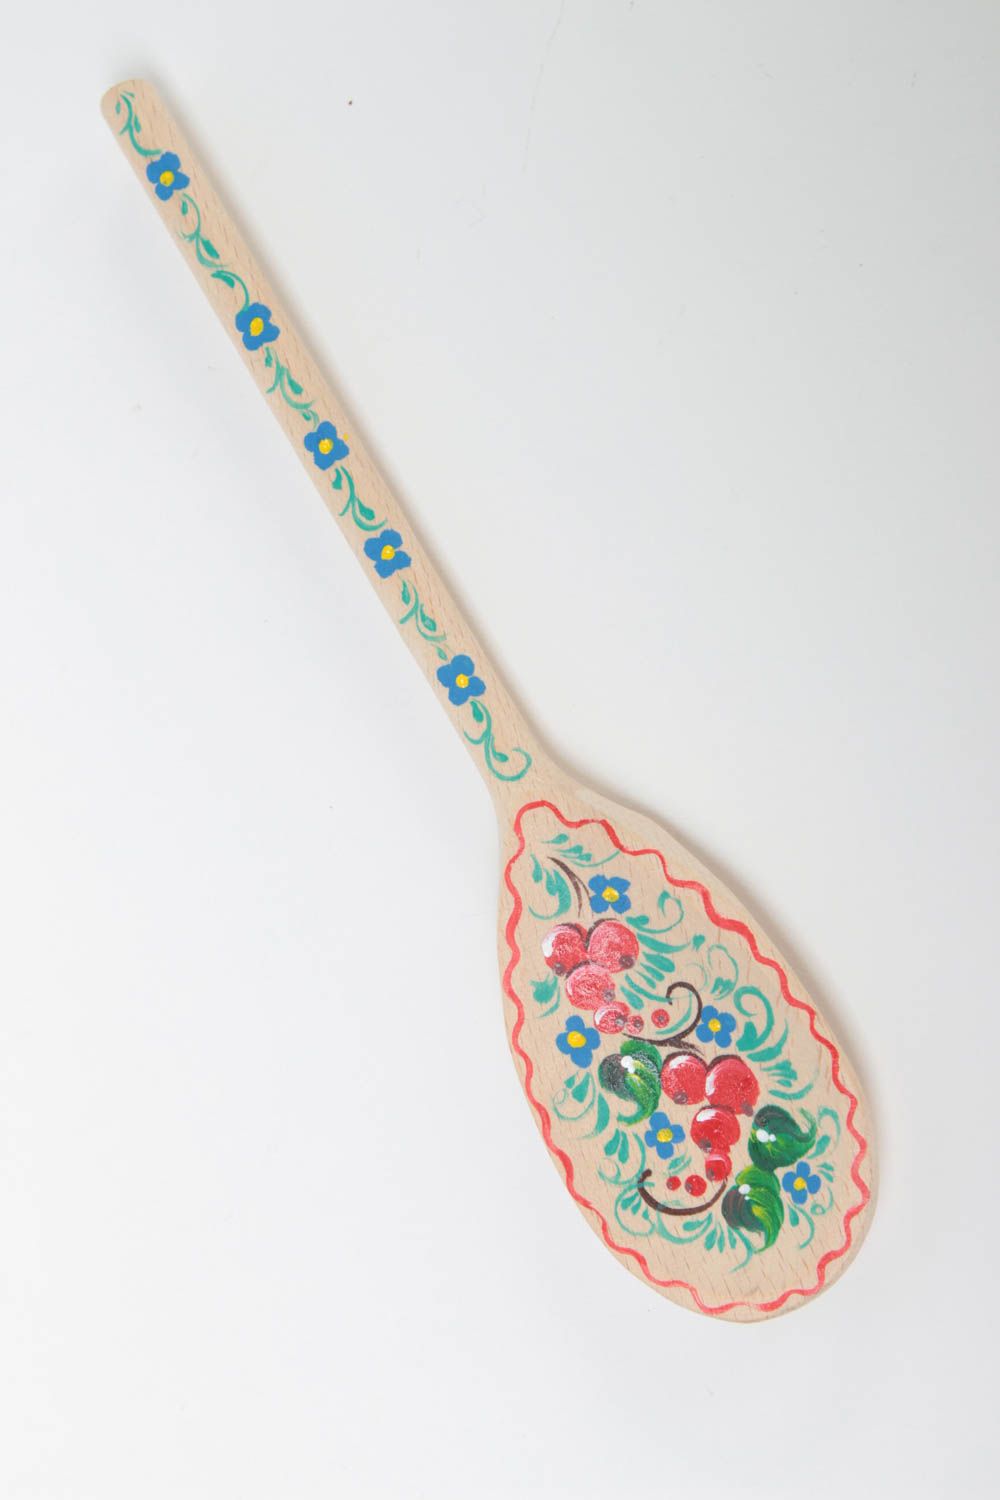 Handmade spoon unusual gift decorating ideas kitchen accessories wooden cutlery photo 2